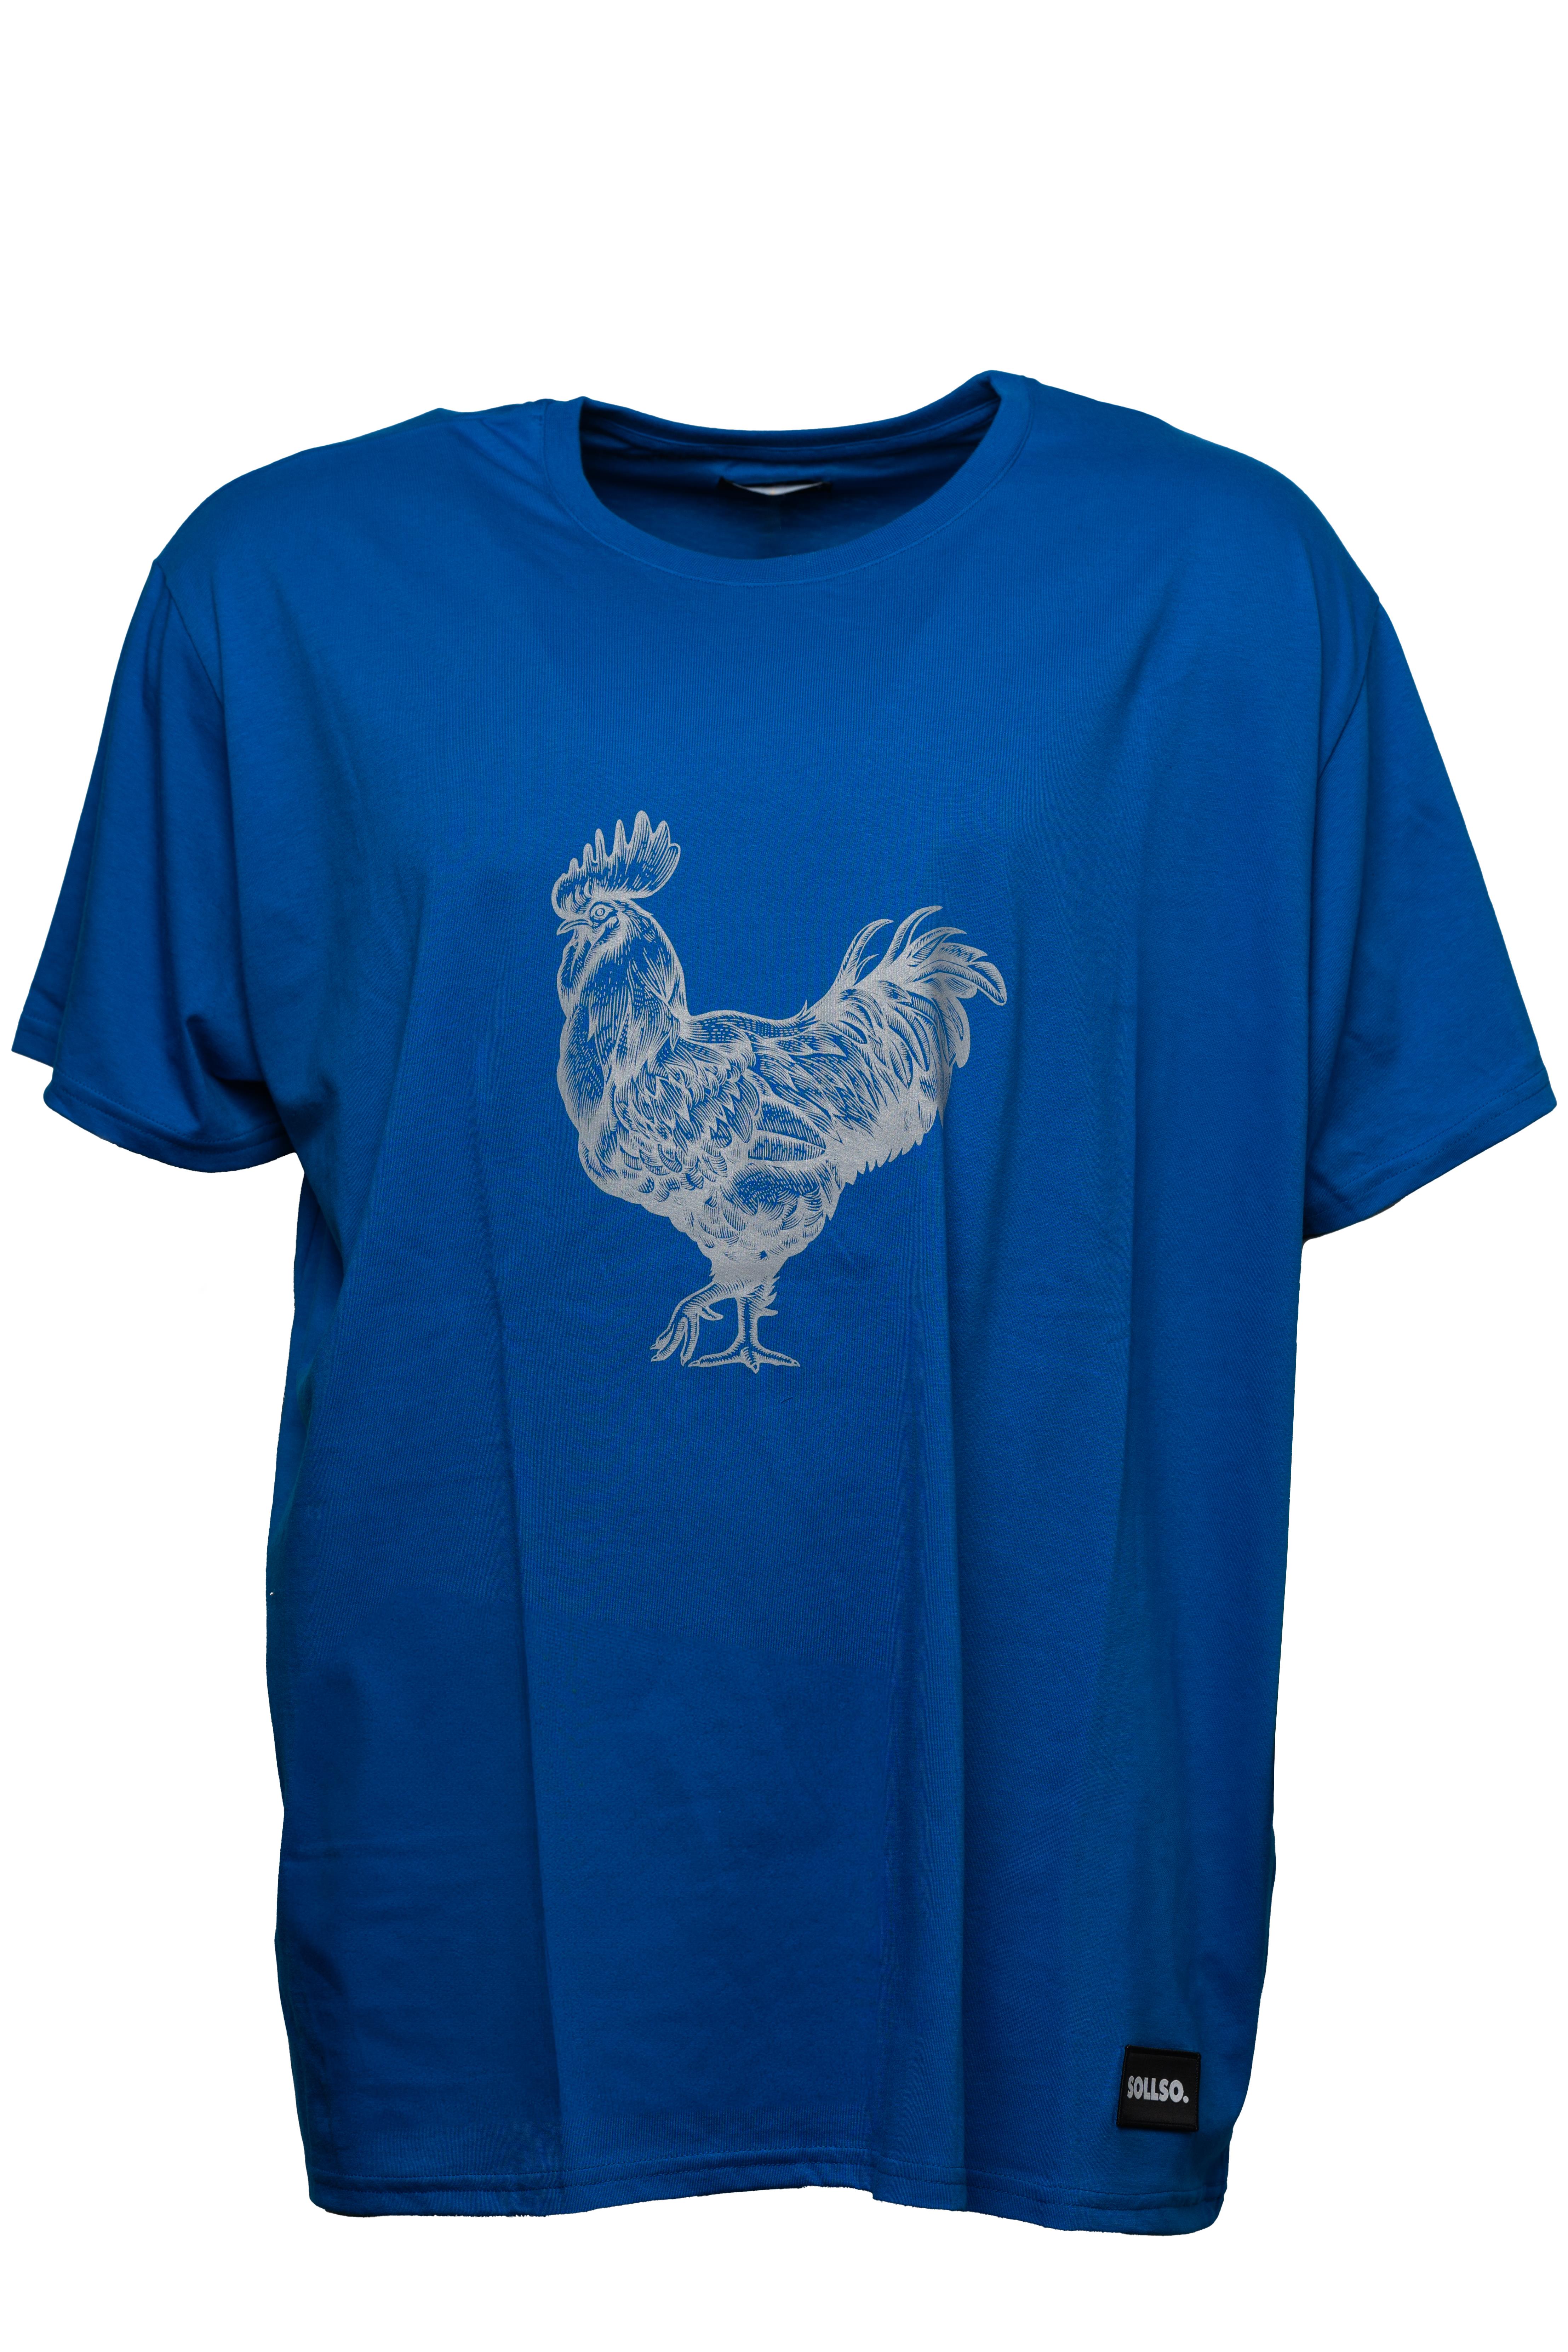 SOLLSO. T-Shirt "Rooster", Farbe Ocean Blue, Größe L